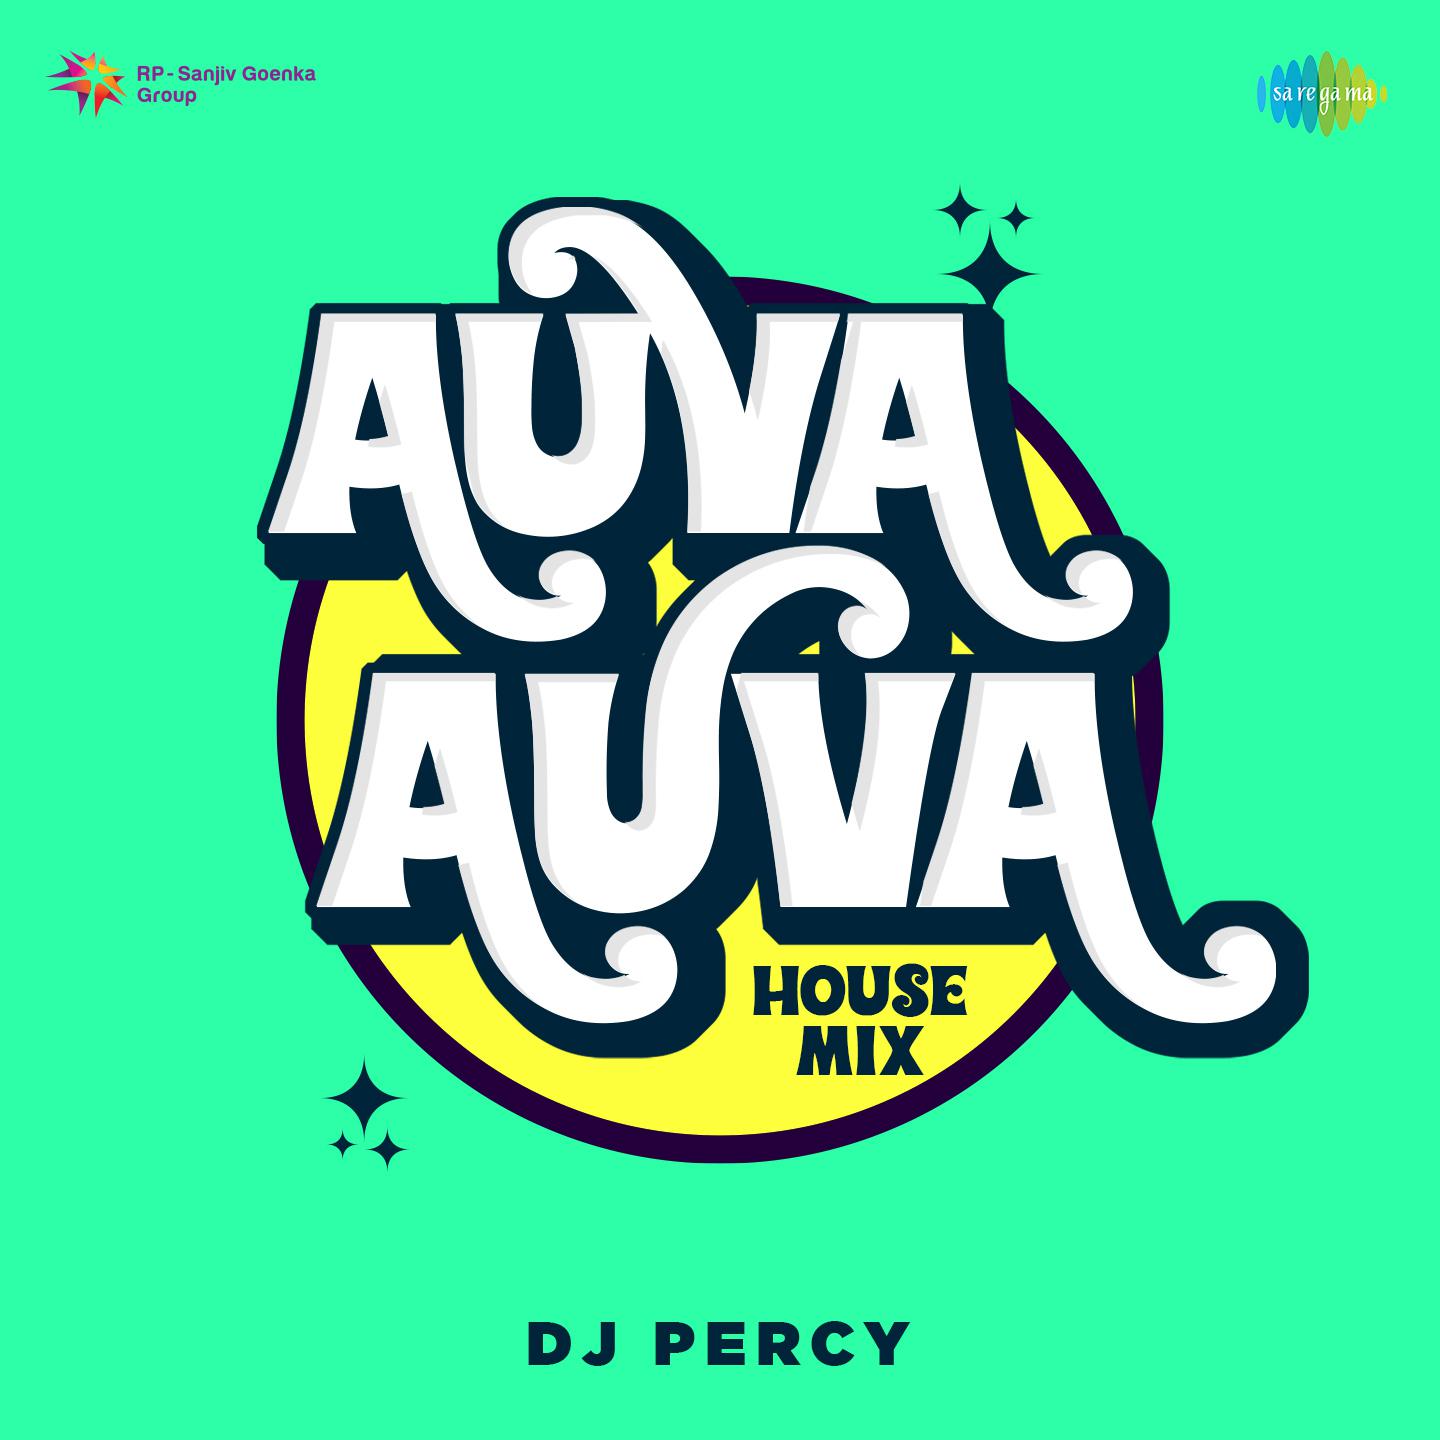 DJ Percy - Auva Auva House Mix